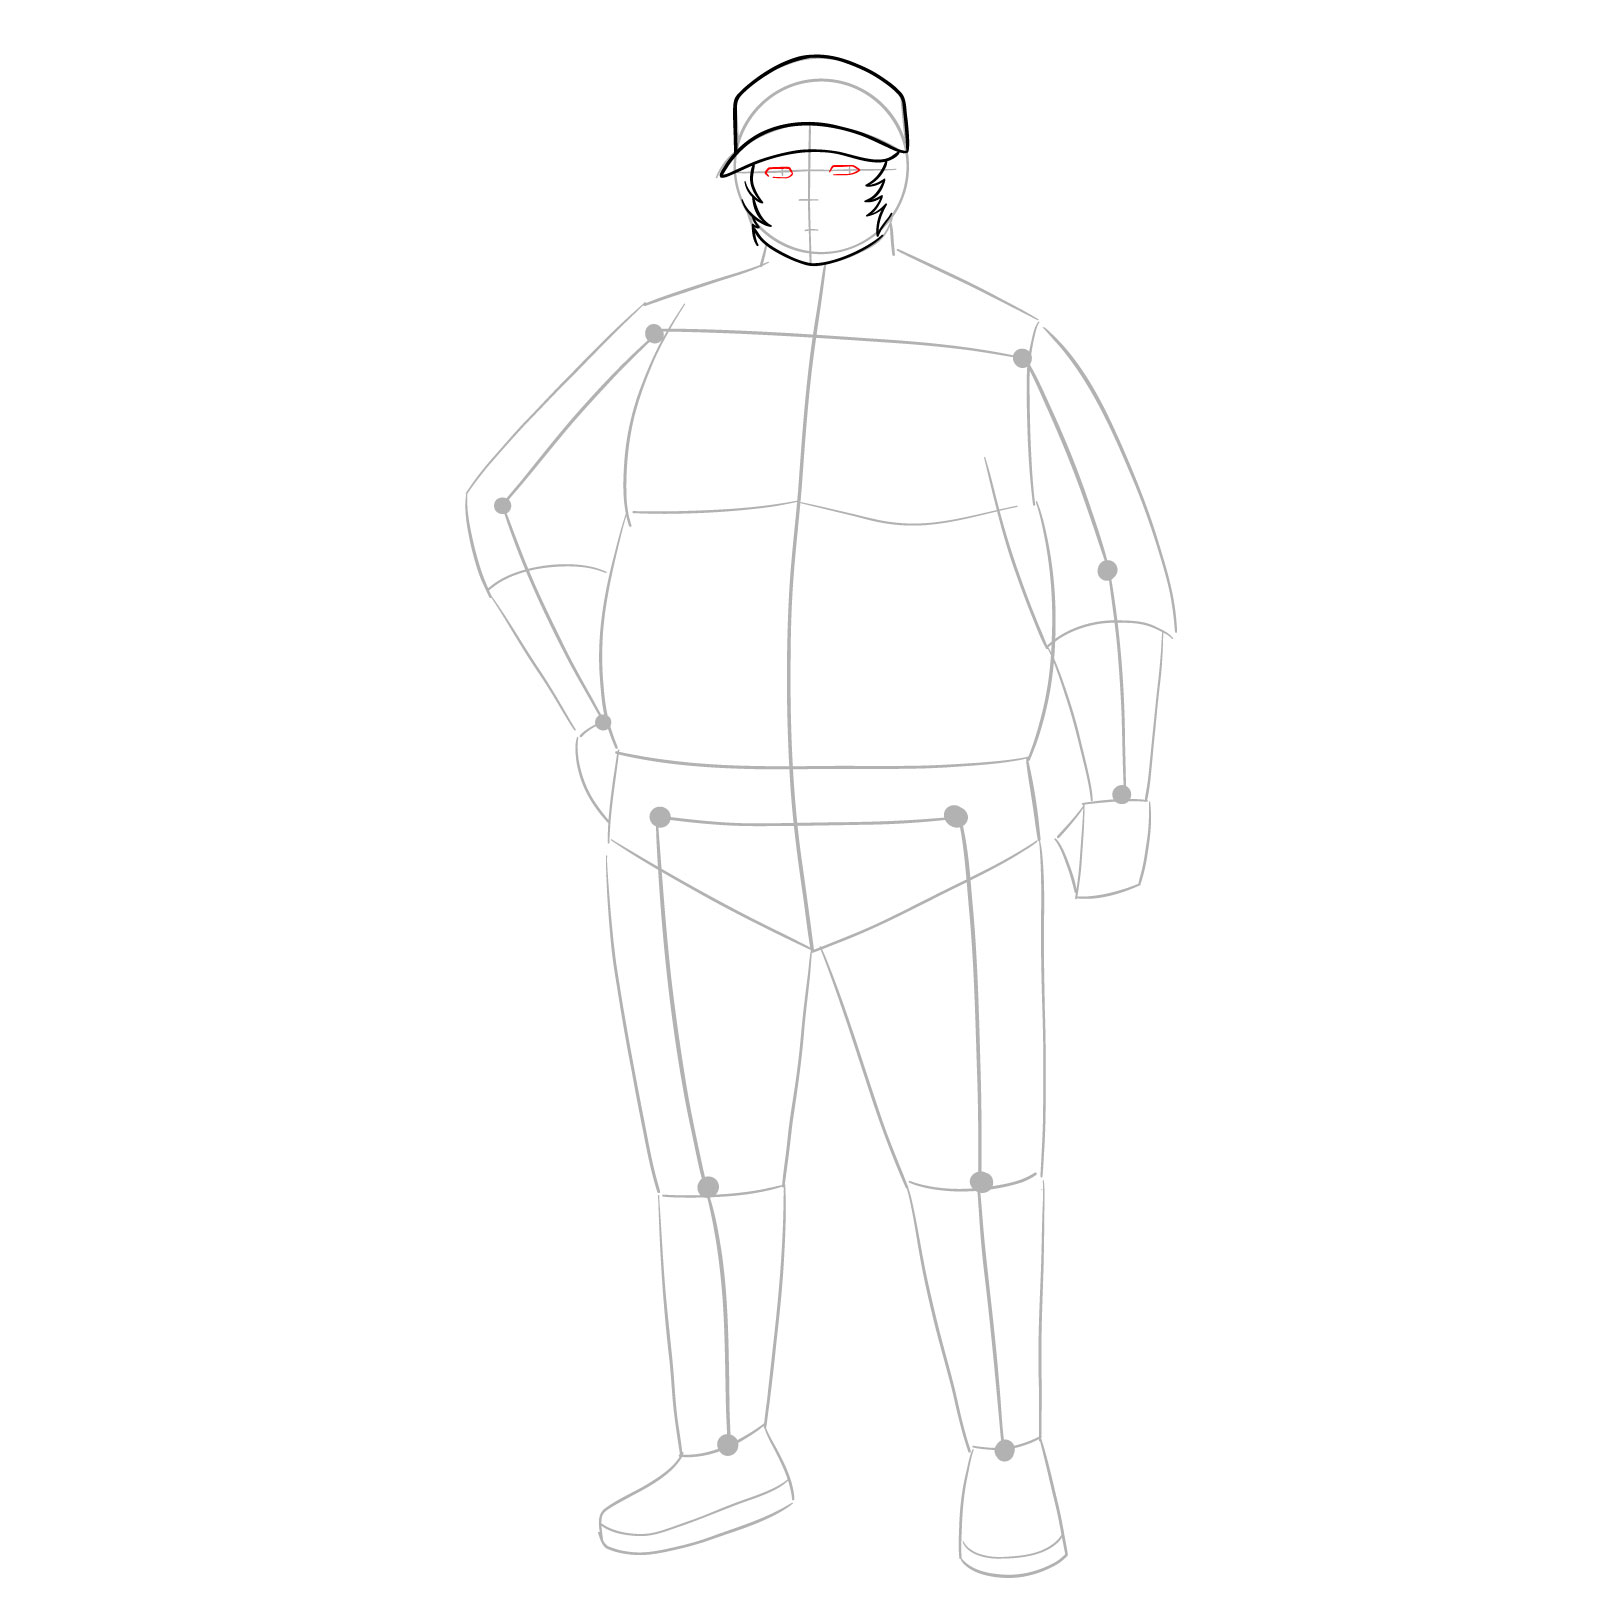 How to draw Itaru Hashida from Steins;Gate - step 09